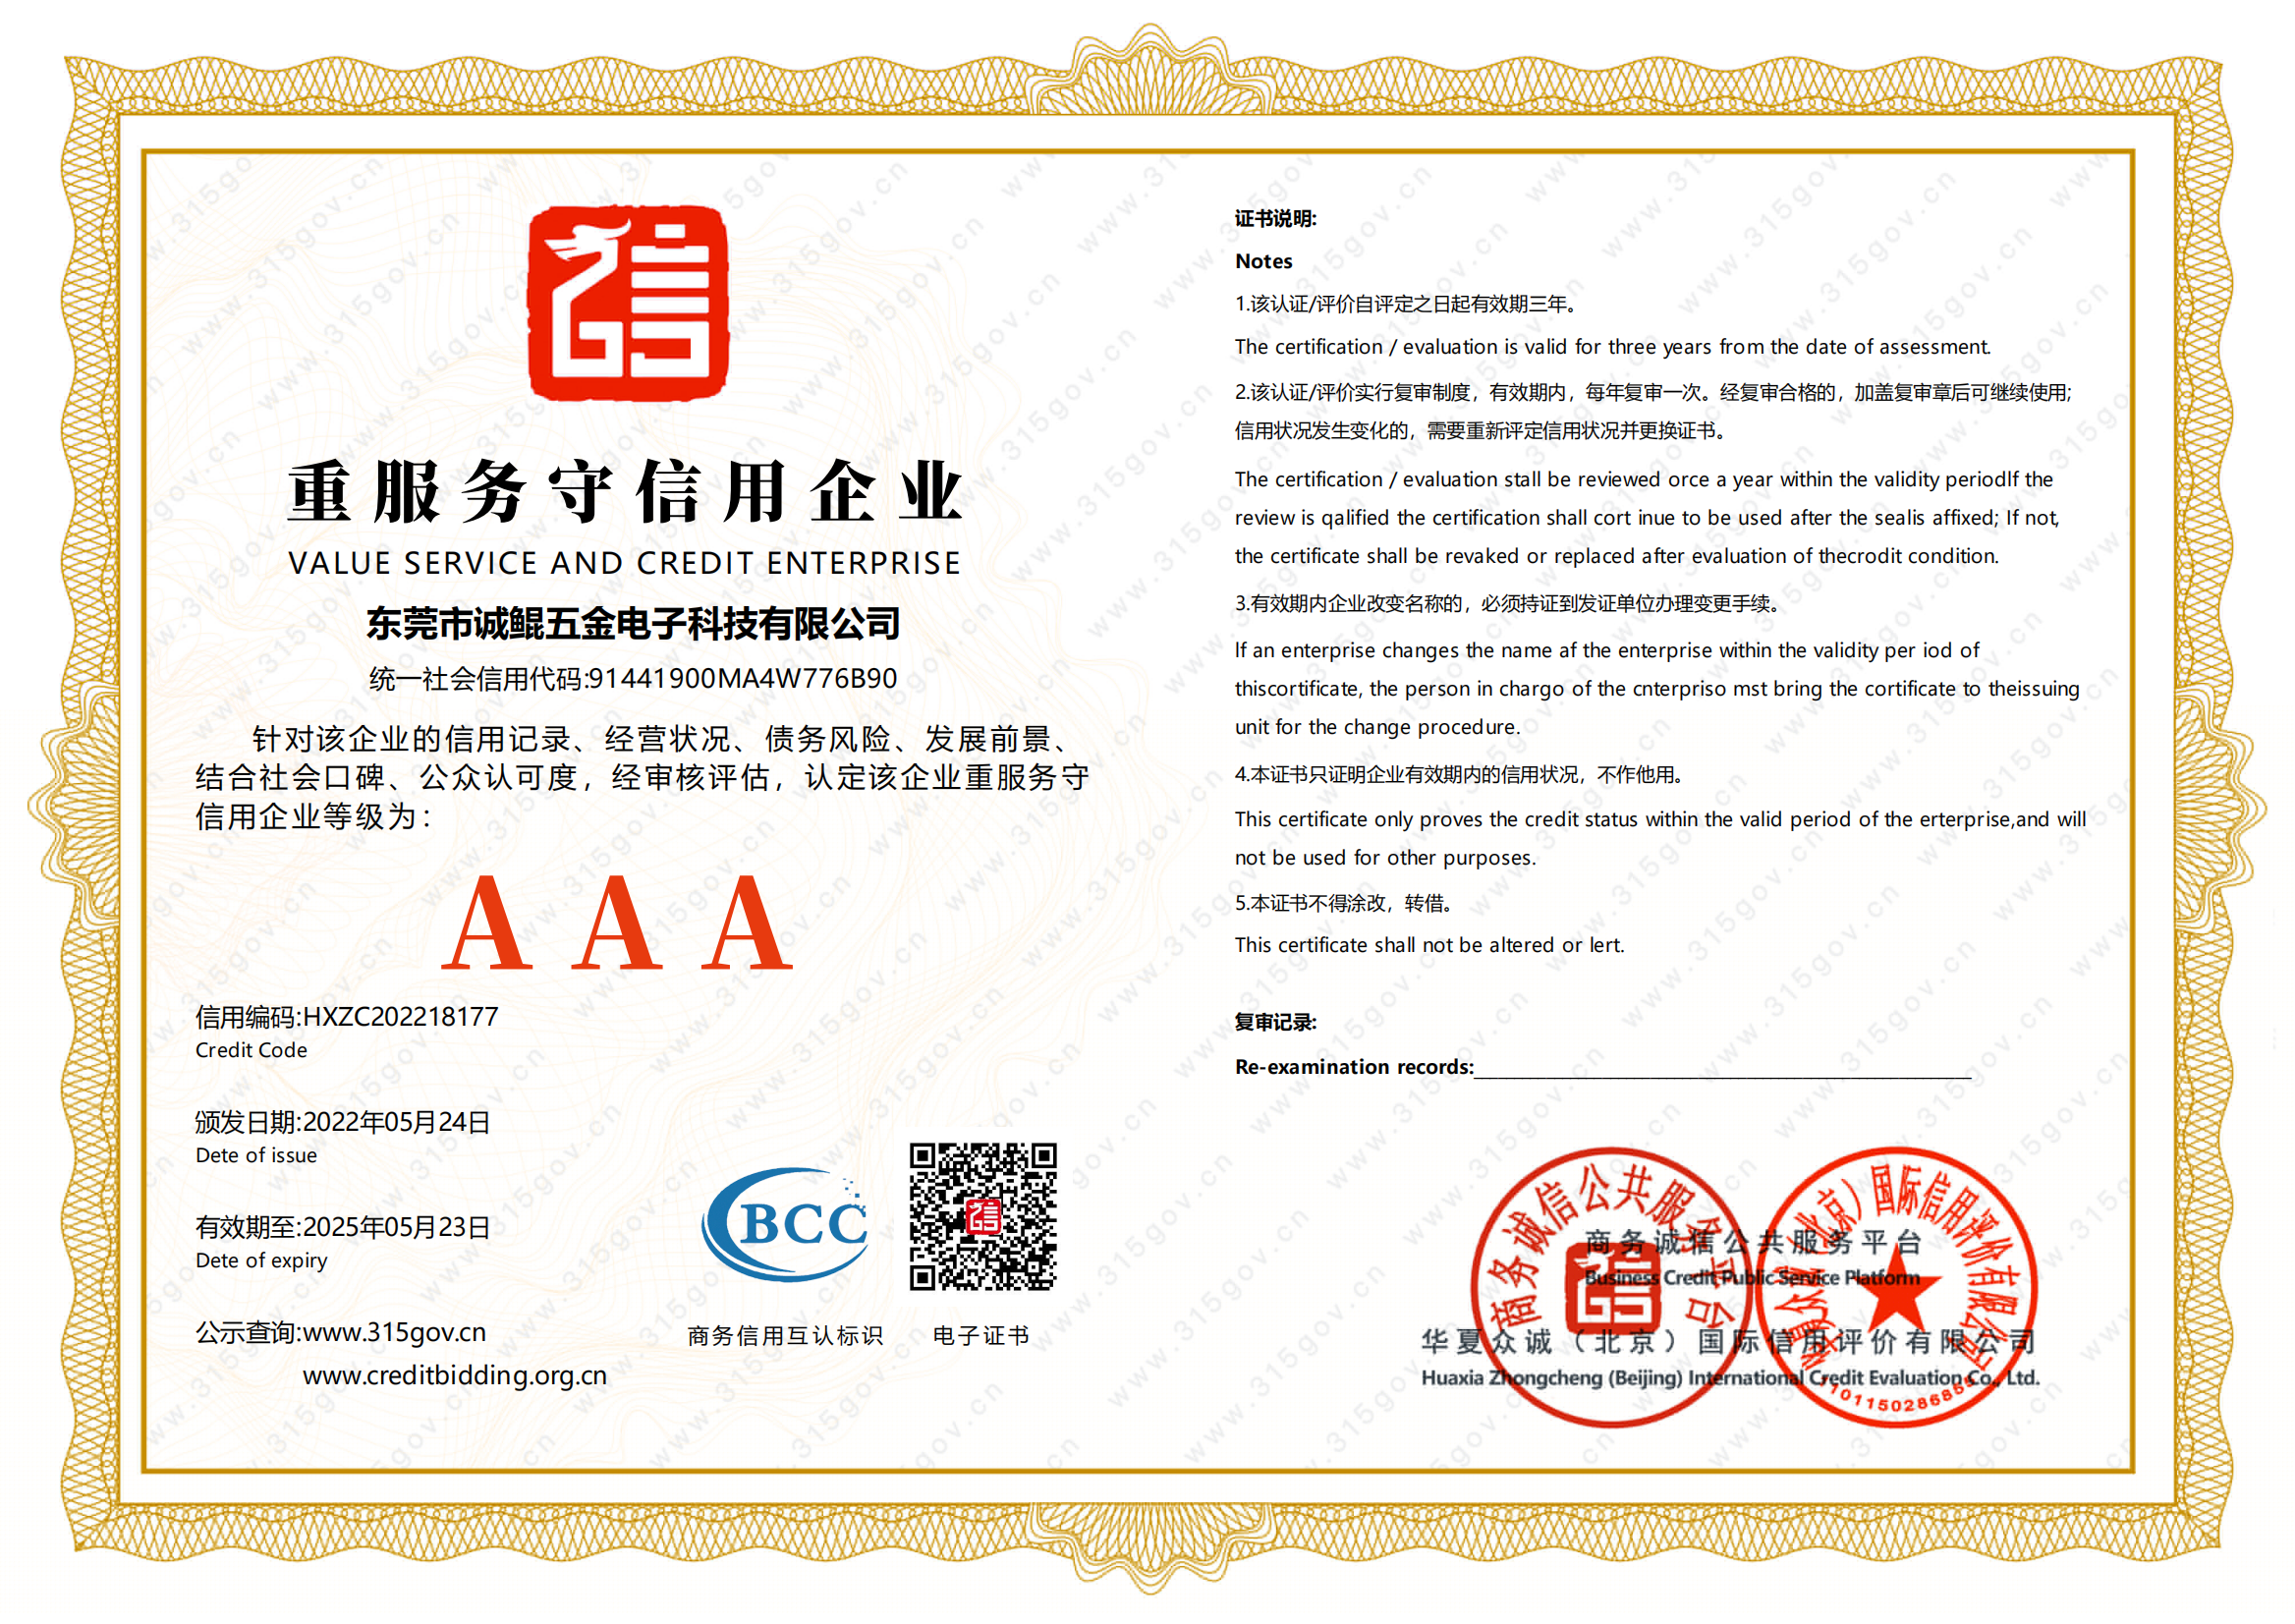 Value service and credit enterprise certificate